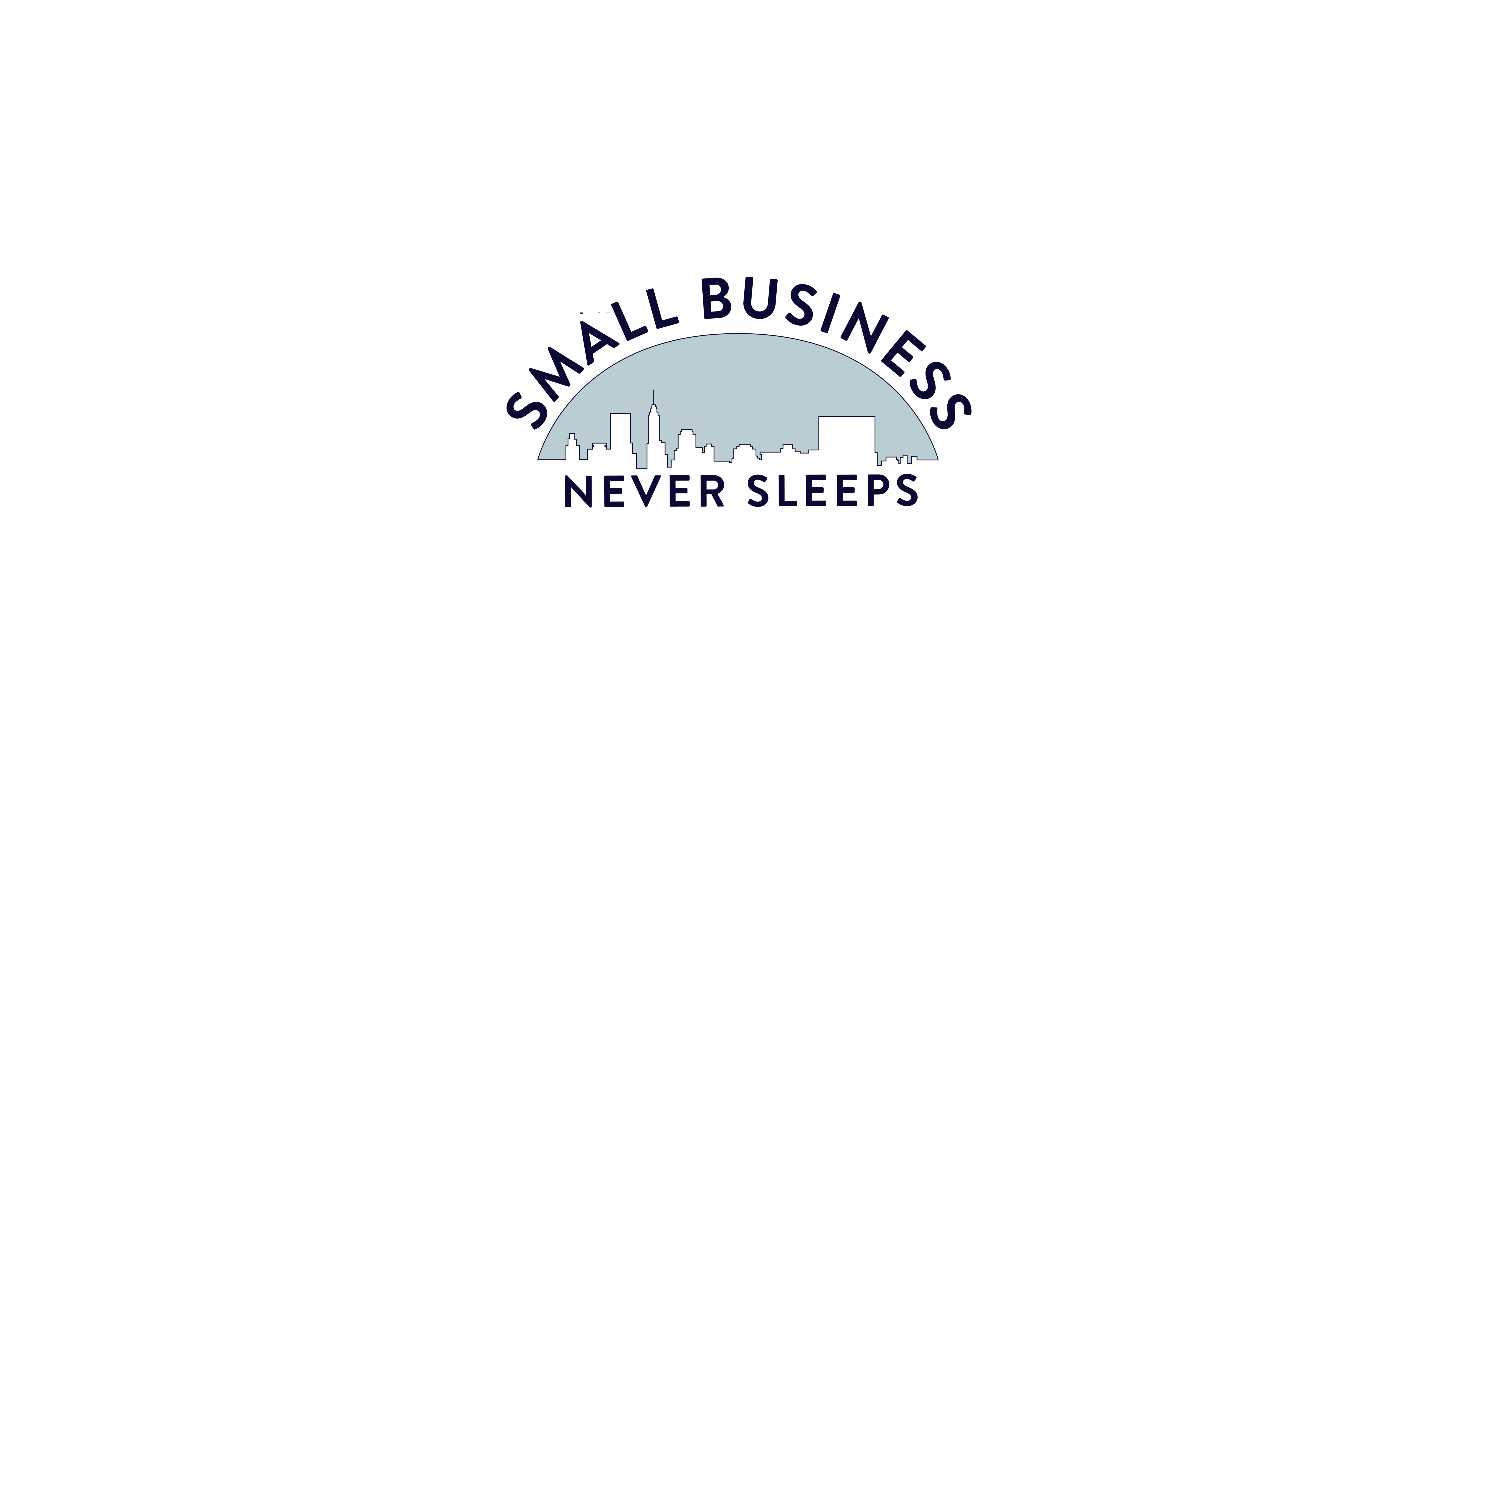 Small Business Never Sleeps